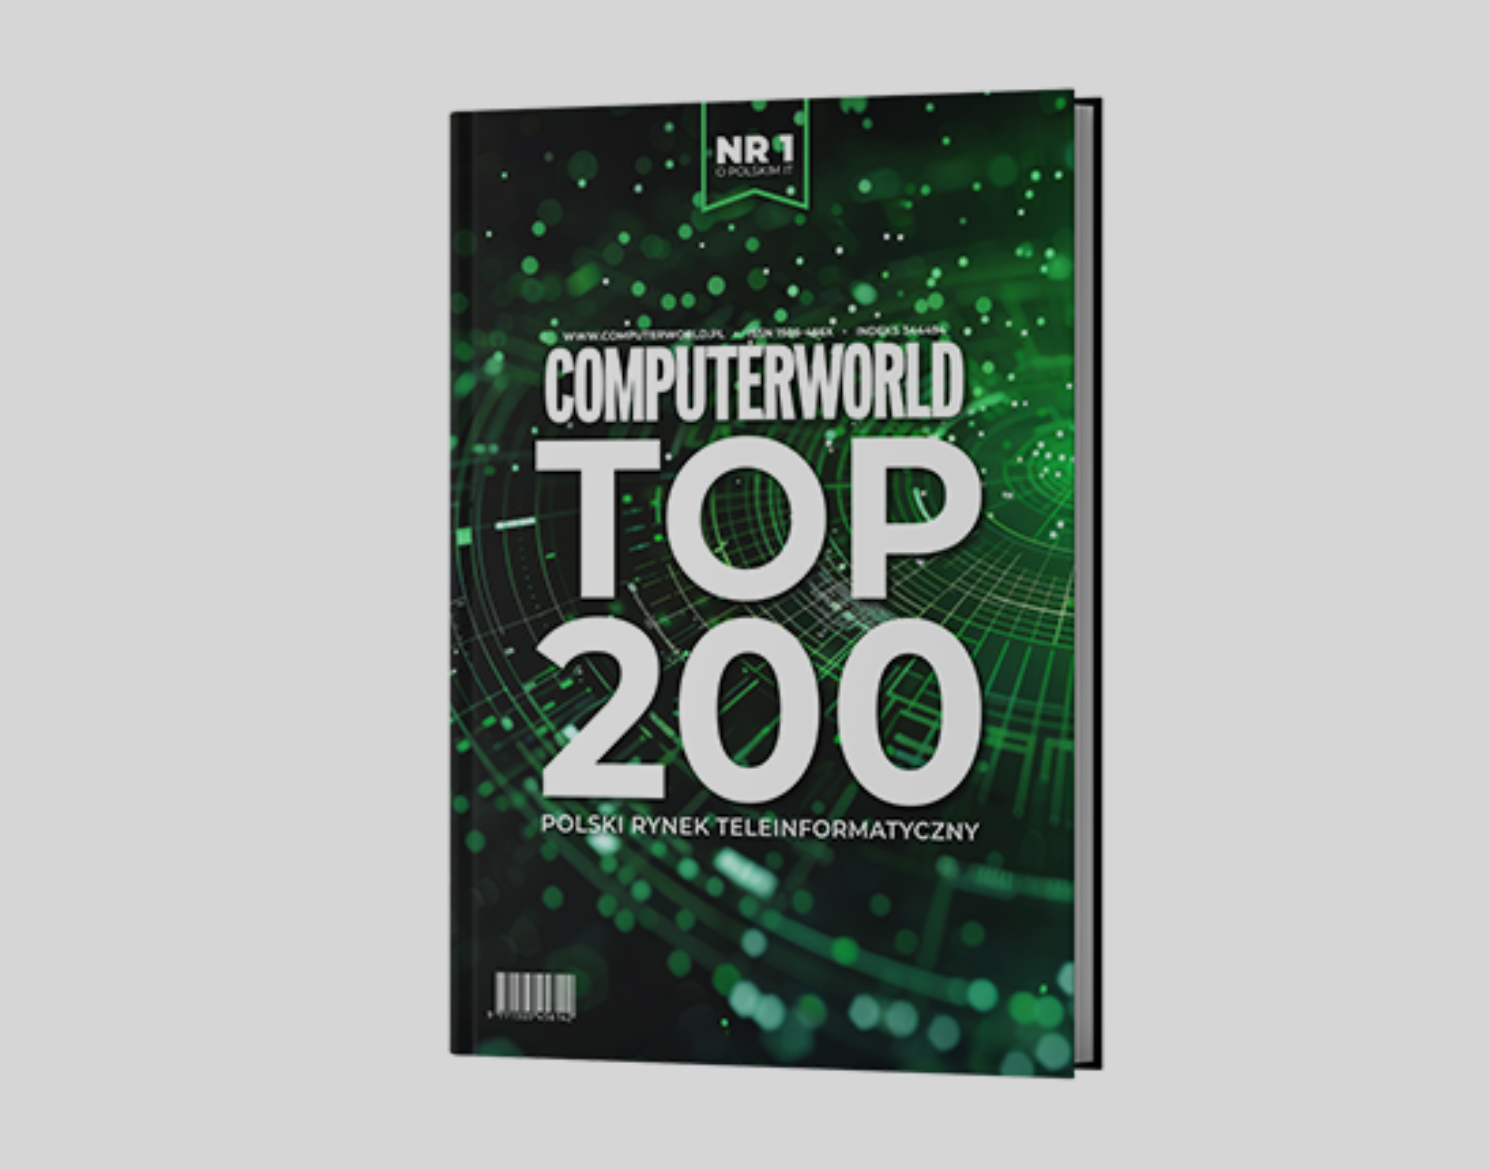 ITDS Poland in the Computerworld Polska Top 200 Ranking